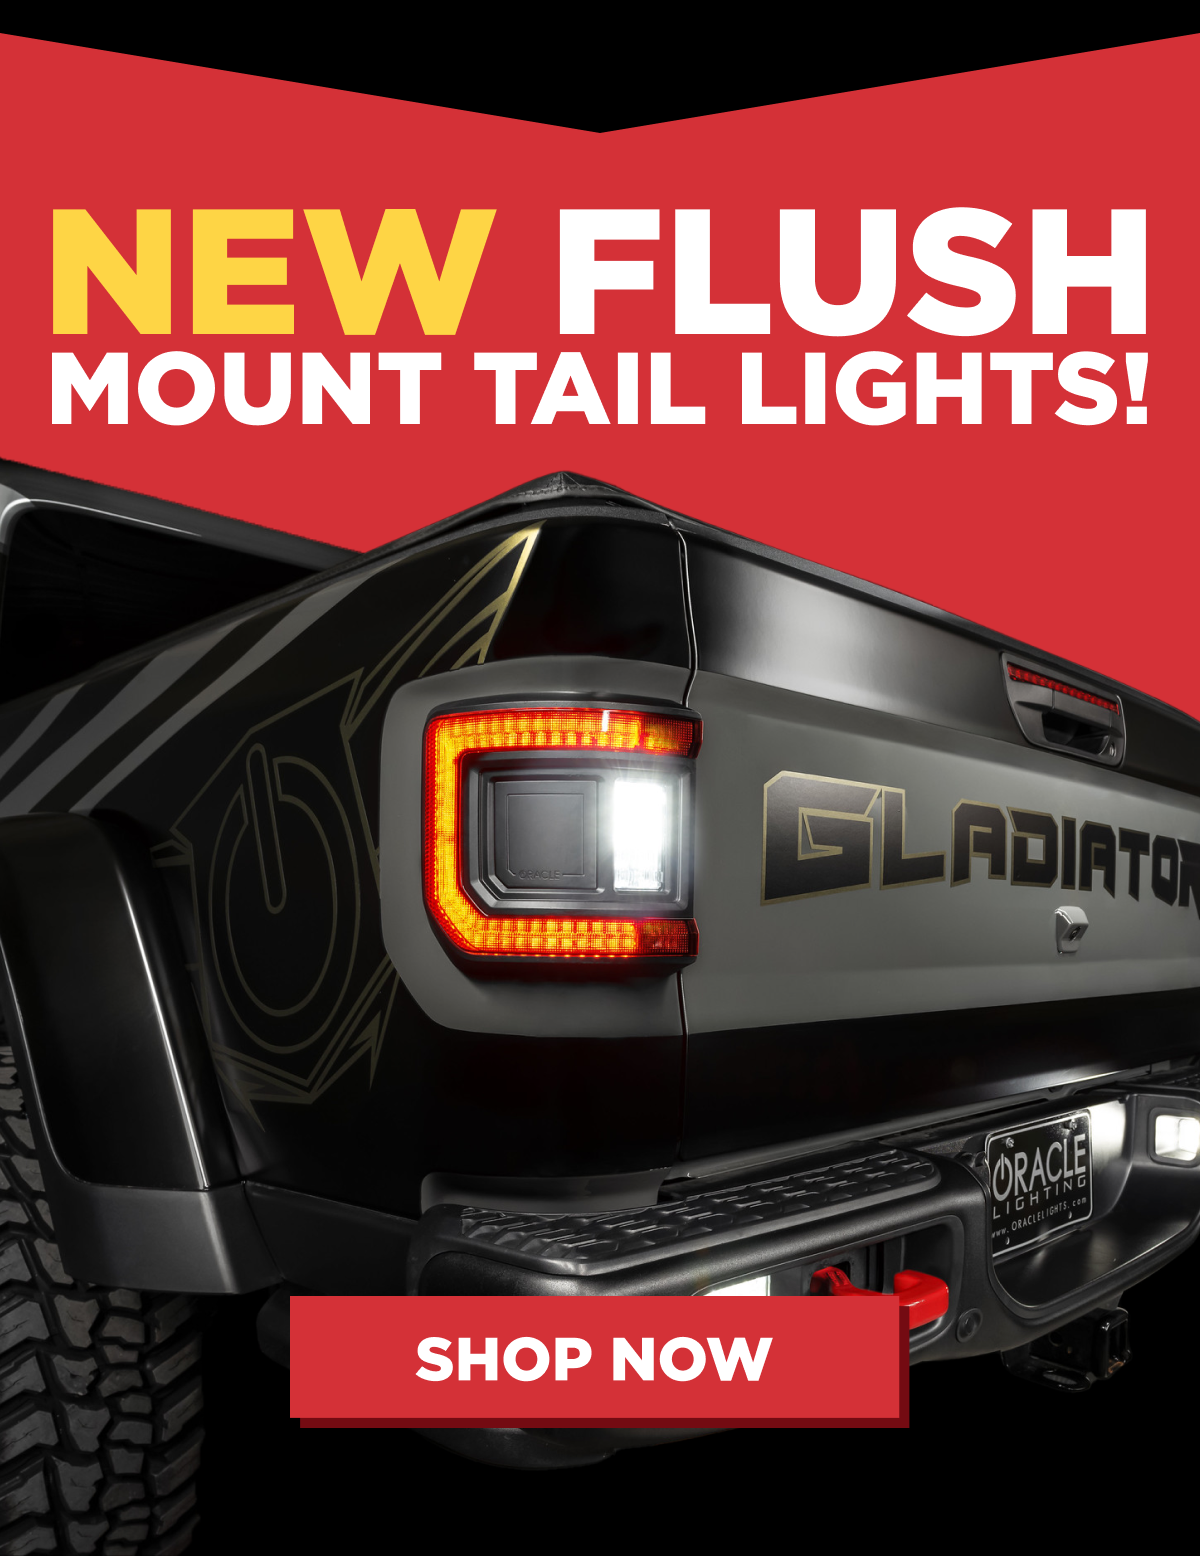 New Flush Mount Tail Lights!